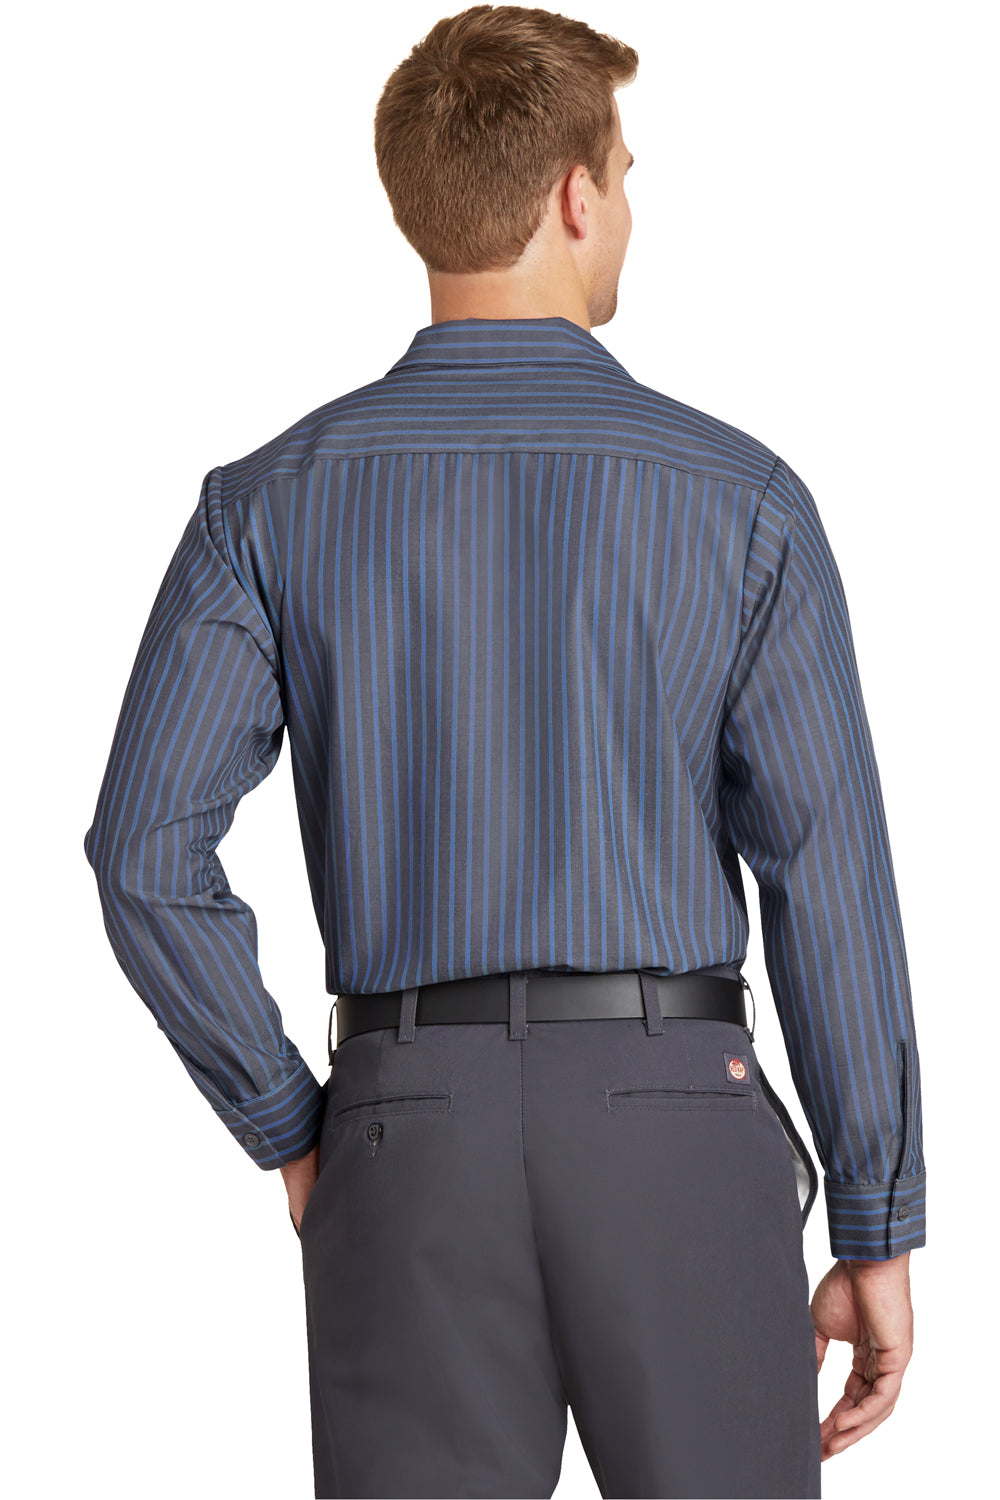 Red Kap CS10 Mens Industrial Moisture Wicking Long Sleeve Button Down Shirt w/ Double Pockets Grey/Blue Back